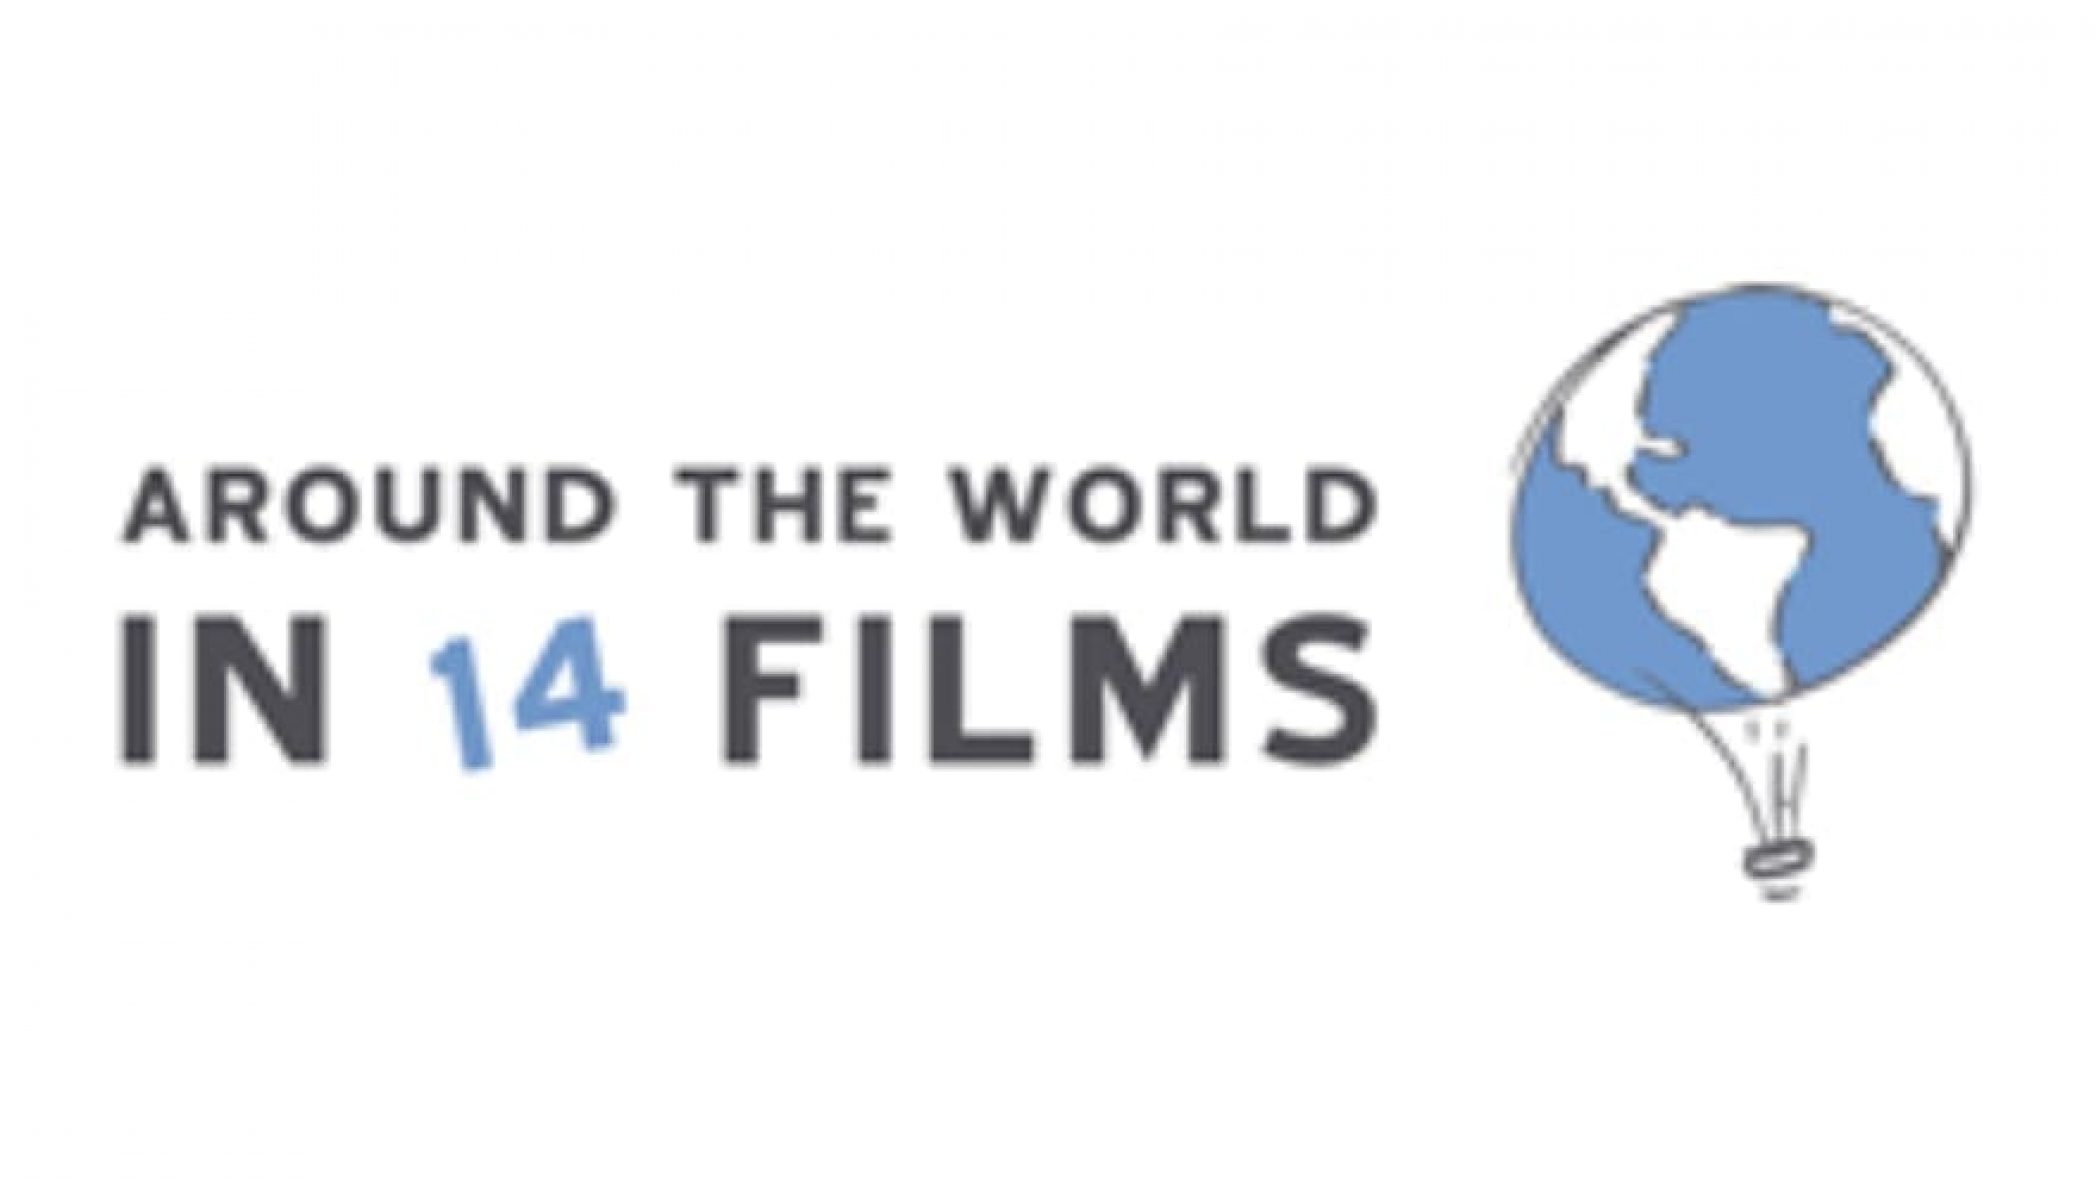 Around The World In 14 Films